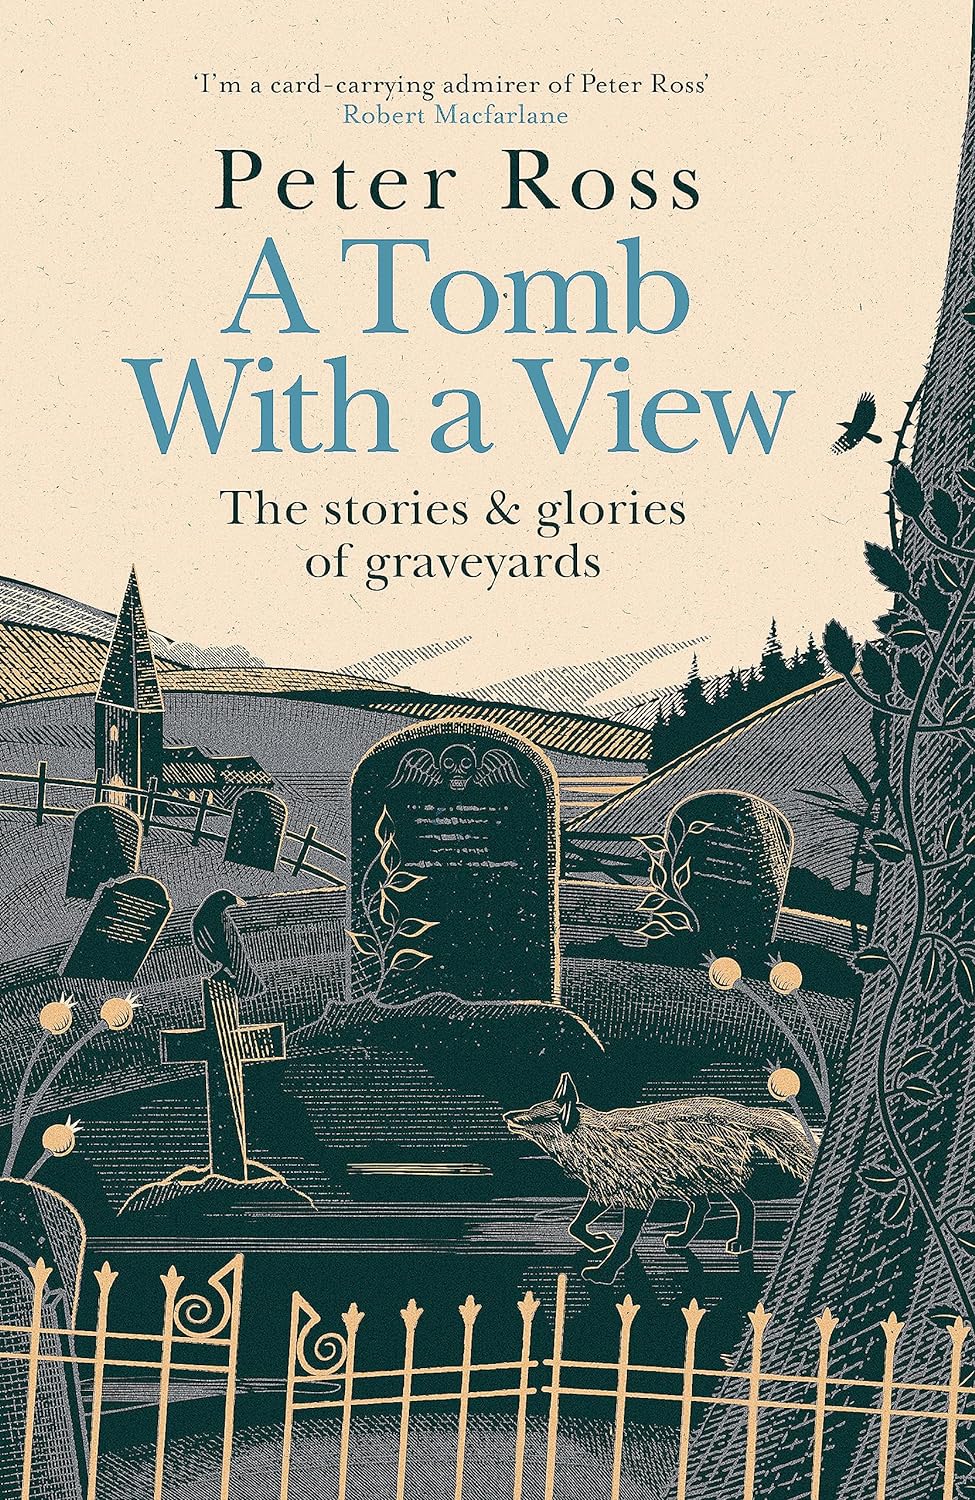 the unique stories & glories of graveyards